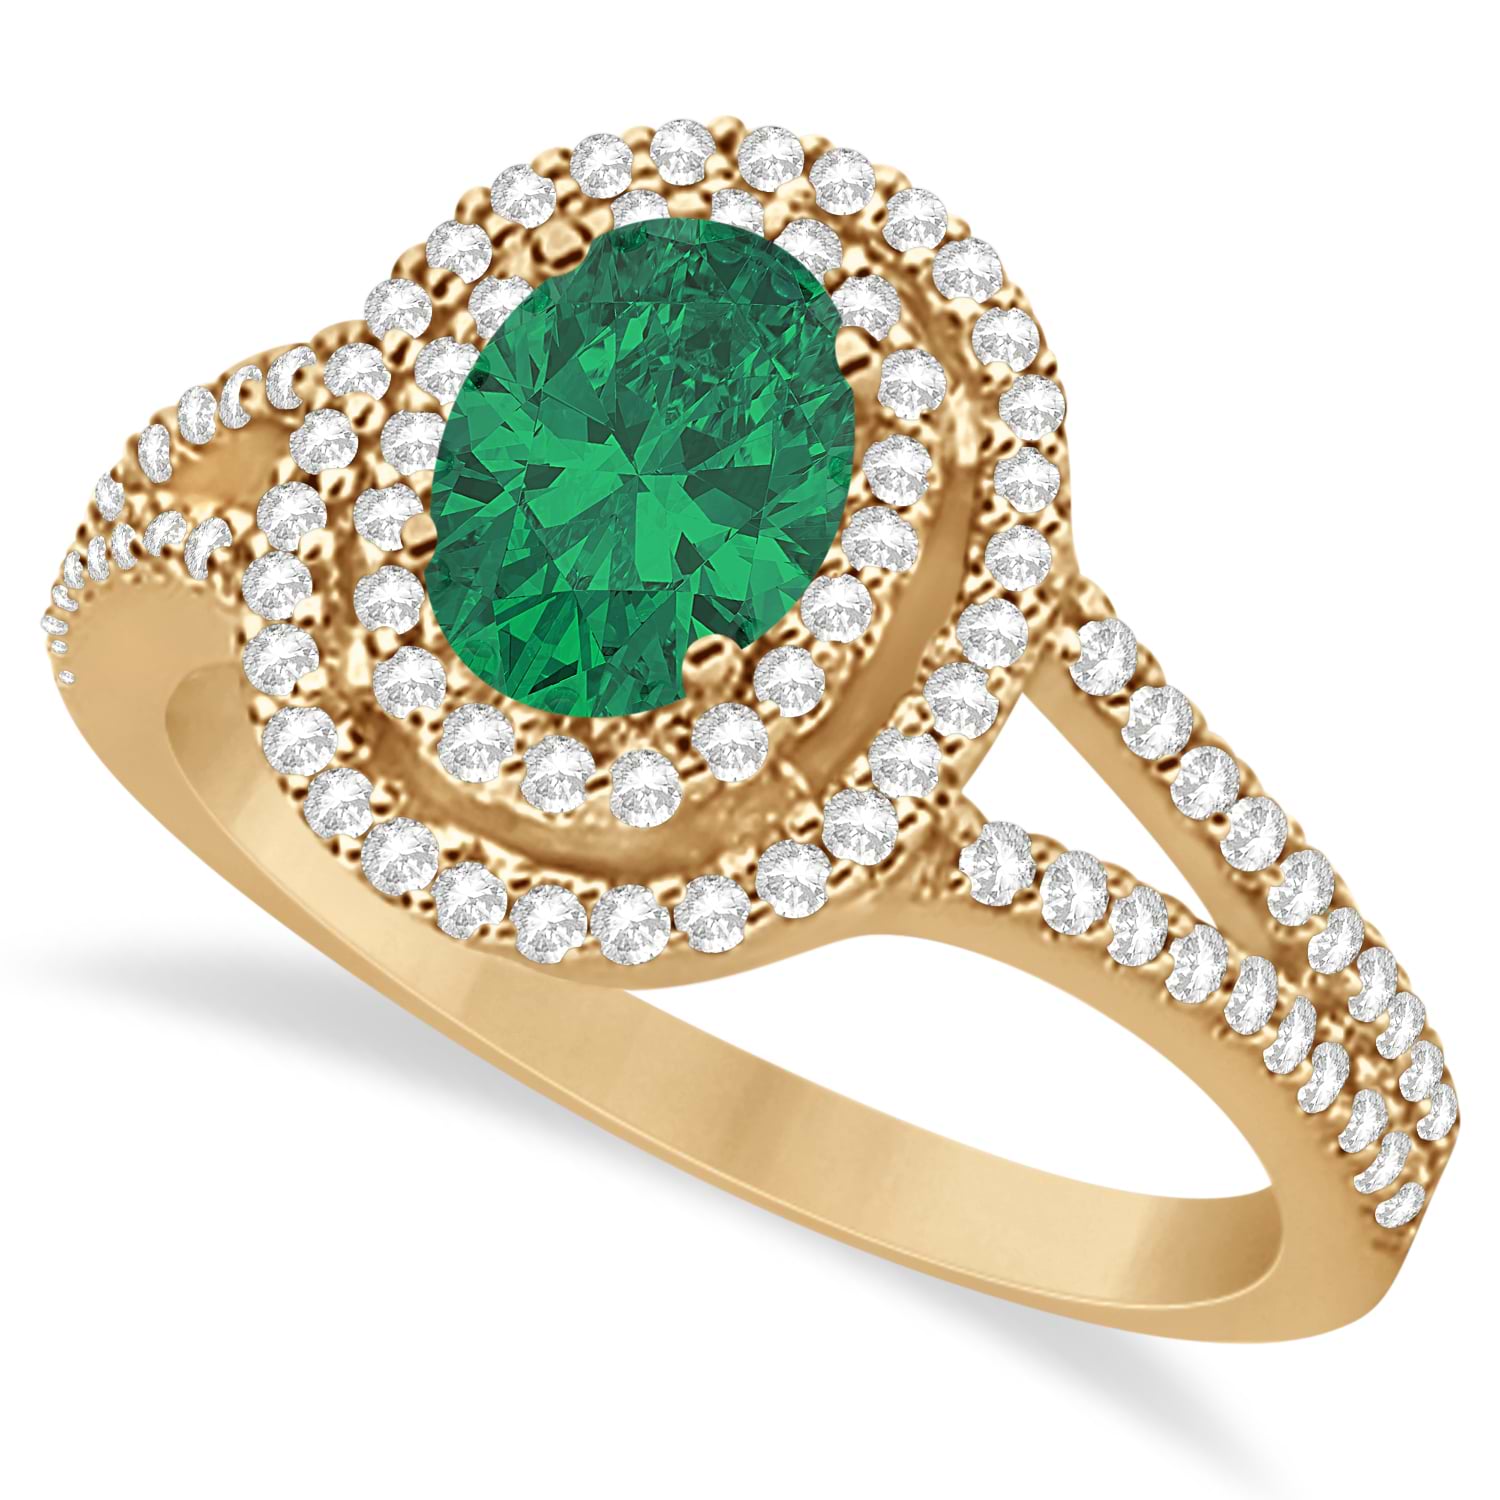 Double Halo Diamond & Emerald Engagement Ring 14K Rose Gold 1.34ctw